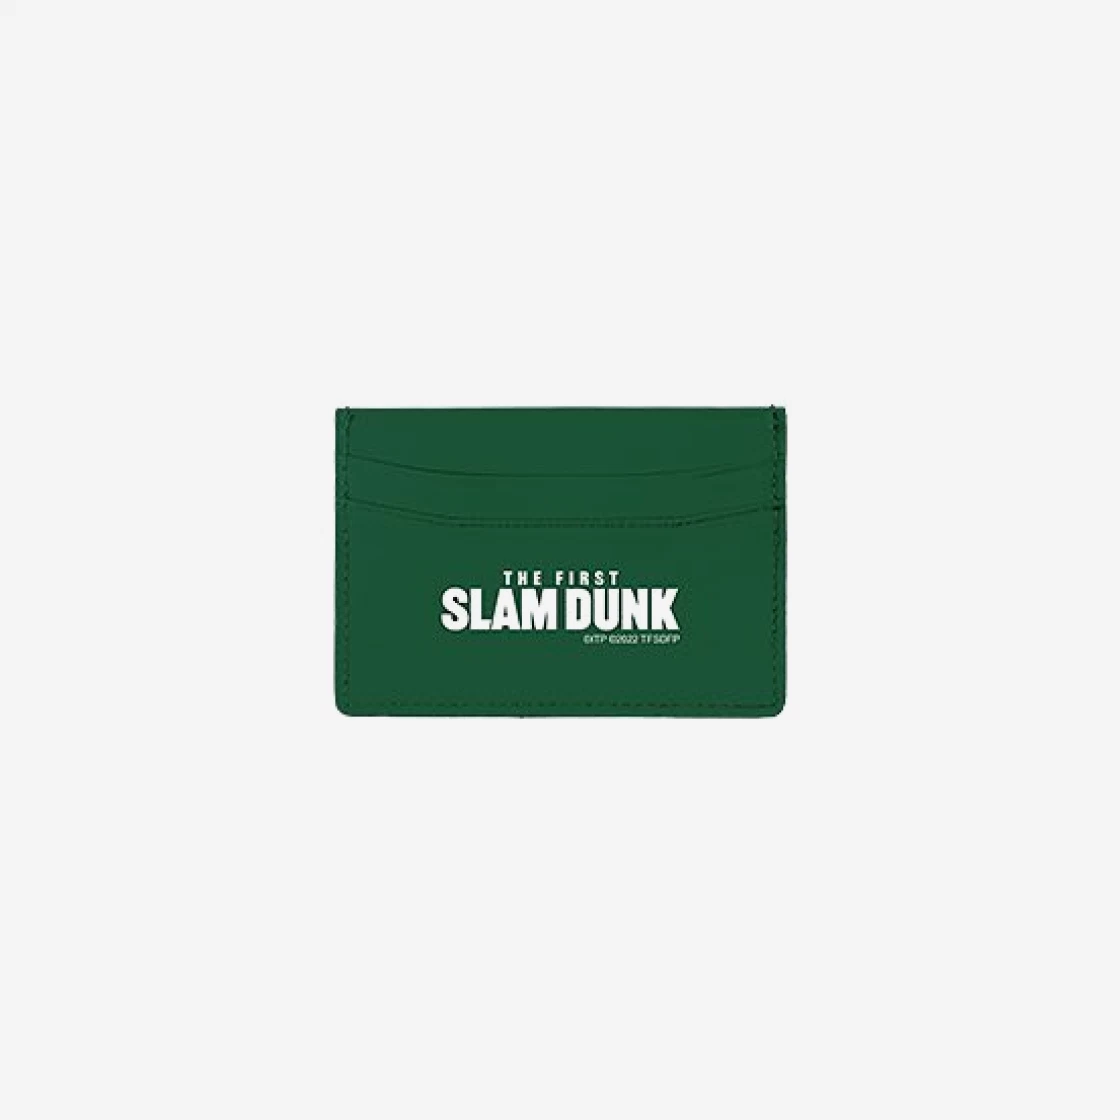 https://d2cva83hdk3bwc.cloudfront.net/the-first-slam-dunk-x-smith-leather-card-pocket-logo-green-2.jpg